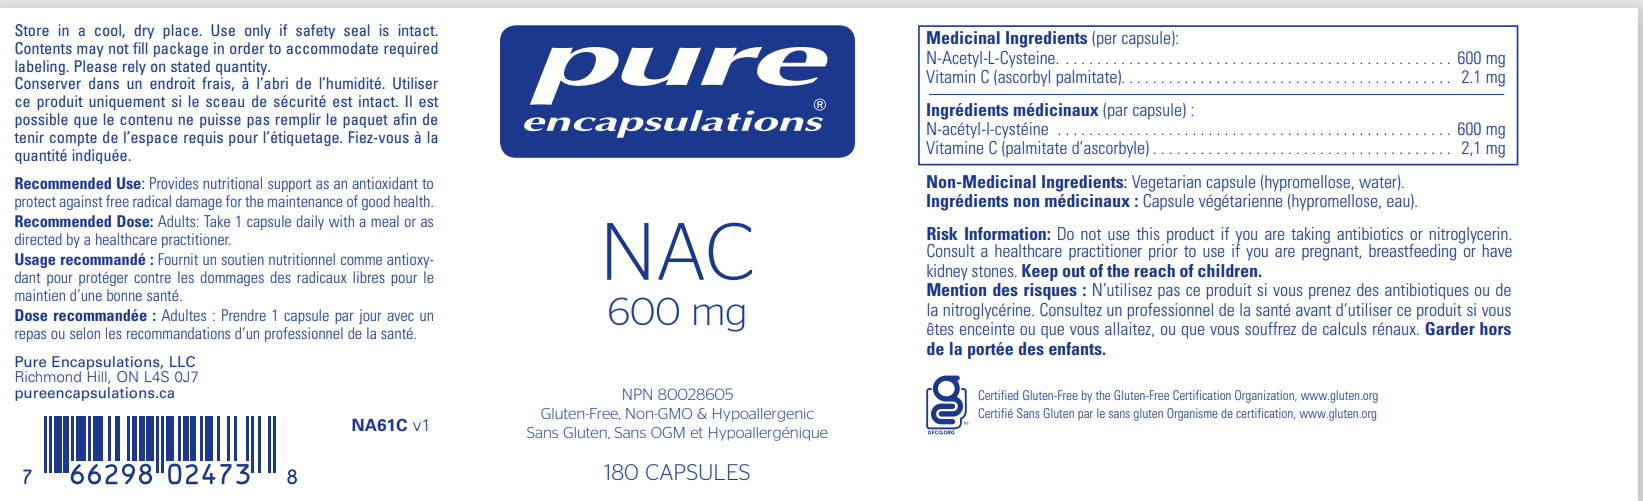 Pure Encapsulations NAC 600 mg